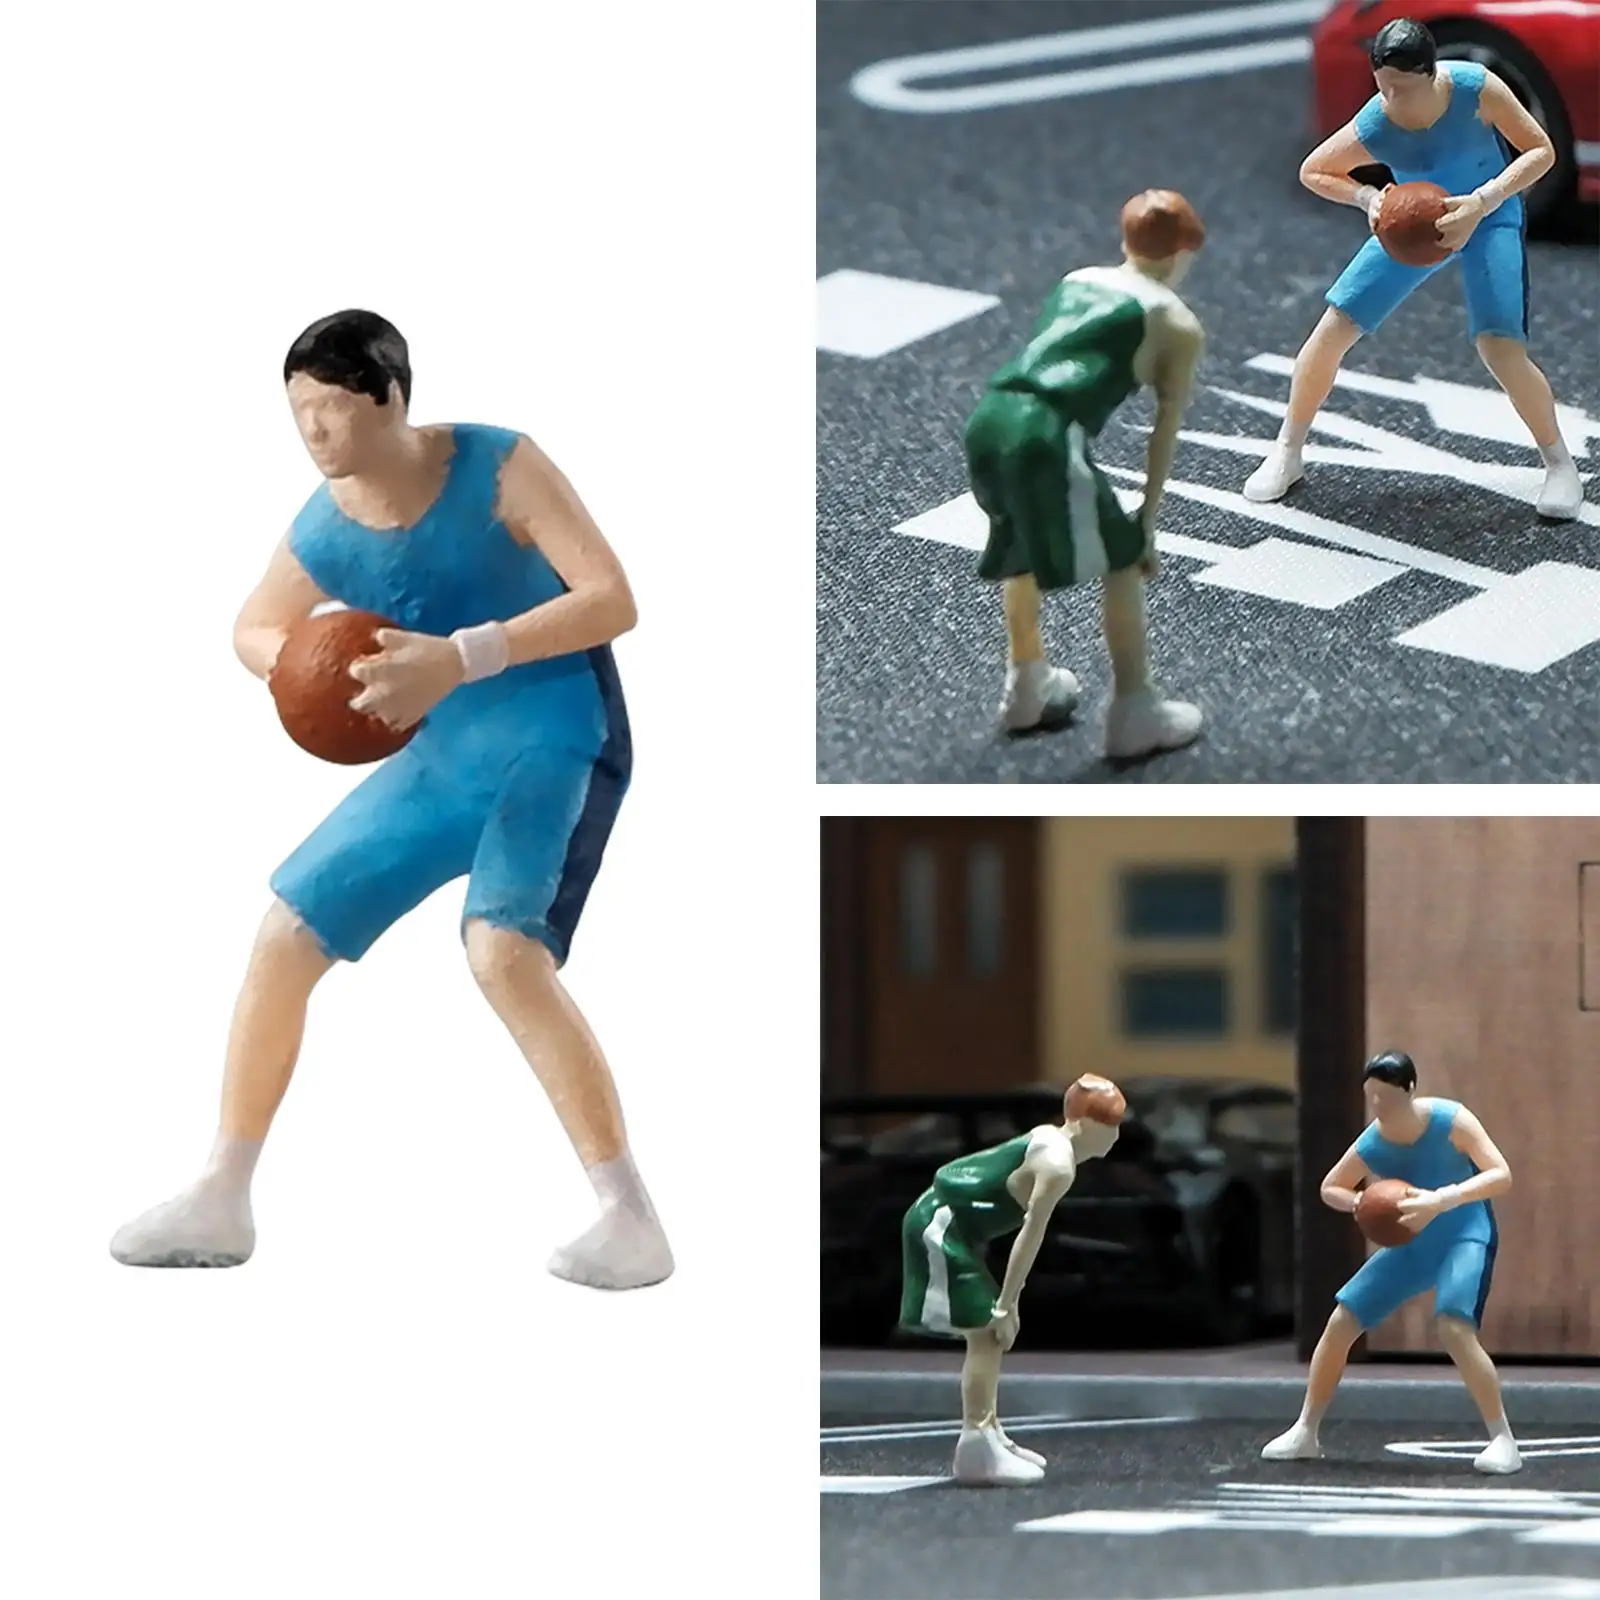 1/64 People Figures Tiny People Model, Basketball Boy Figures, Mini People Figurines for Miniature Scene